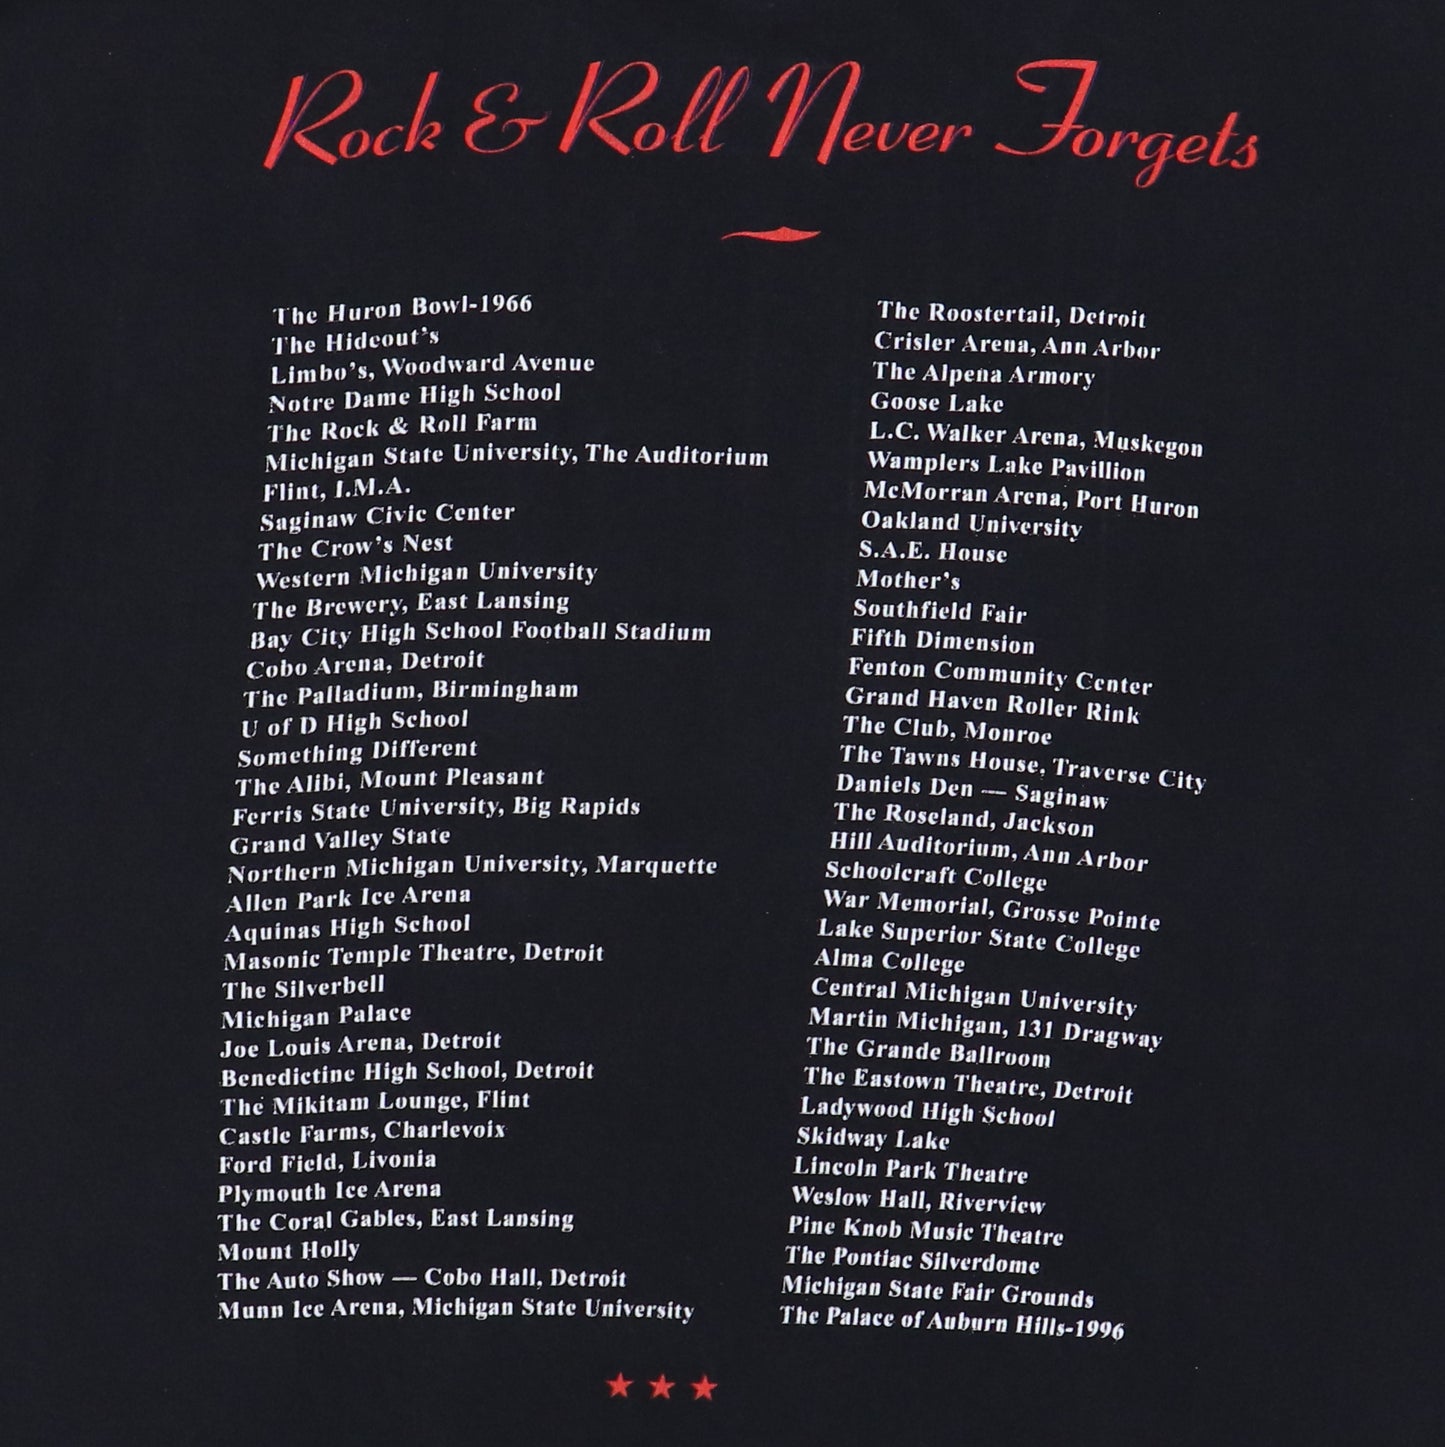 1996 Bob Seger Rock & Roll Never Forgets Tour Shirt